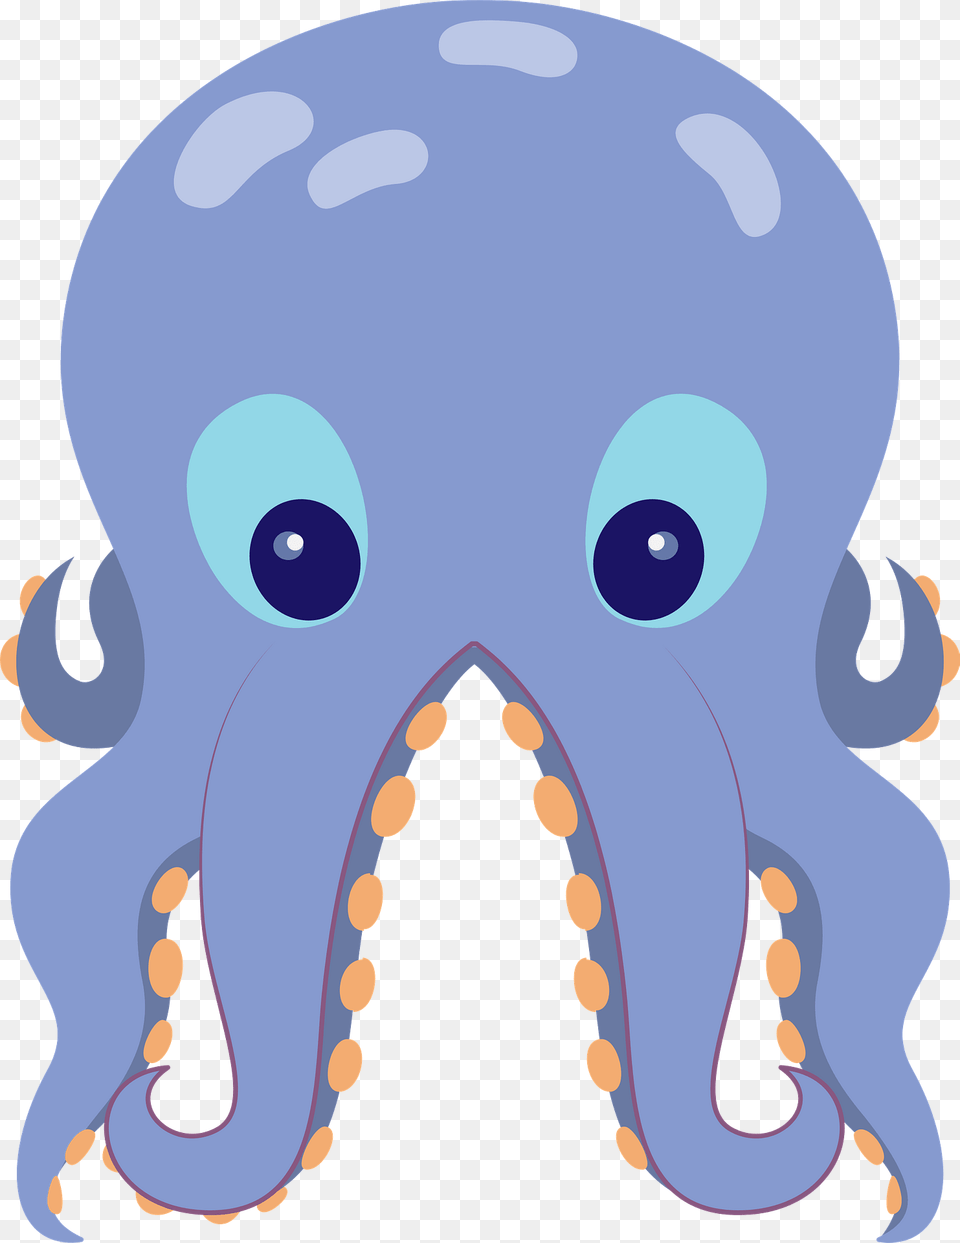 Octopus Clipart, Animal, Sea Life, Invertebrate Png